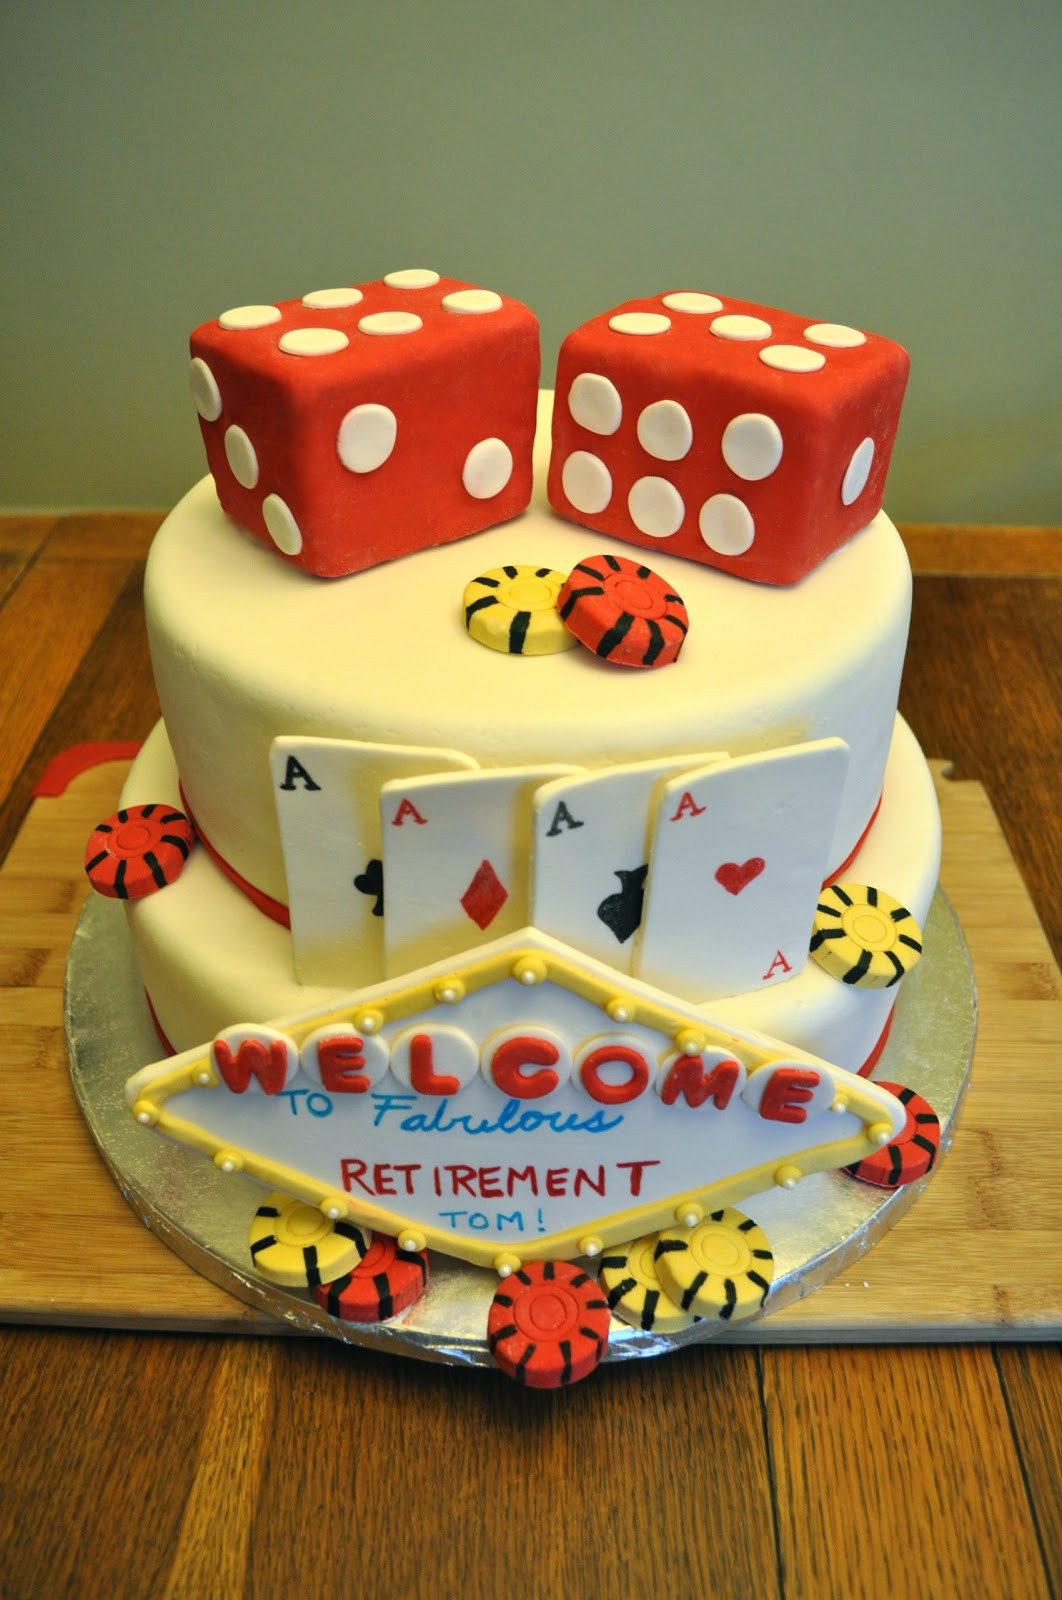 Retirement Party Cake Ideas
 Cakes by Setia Retirement Cake Vegas Style